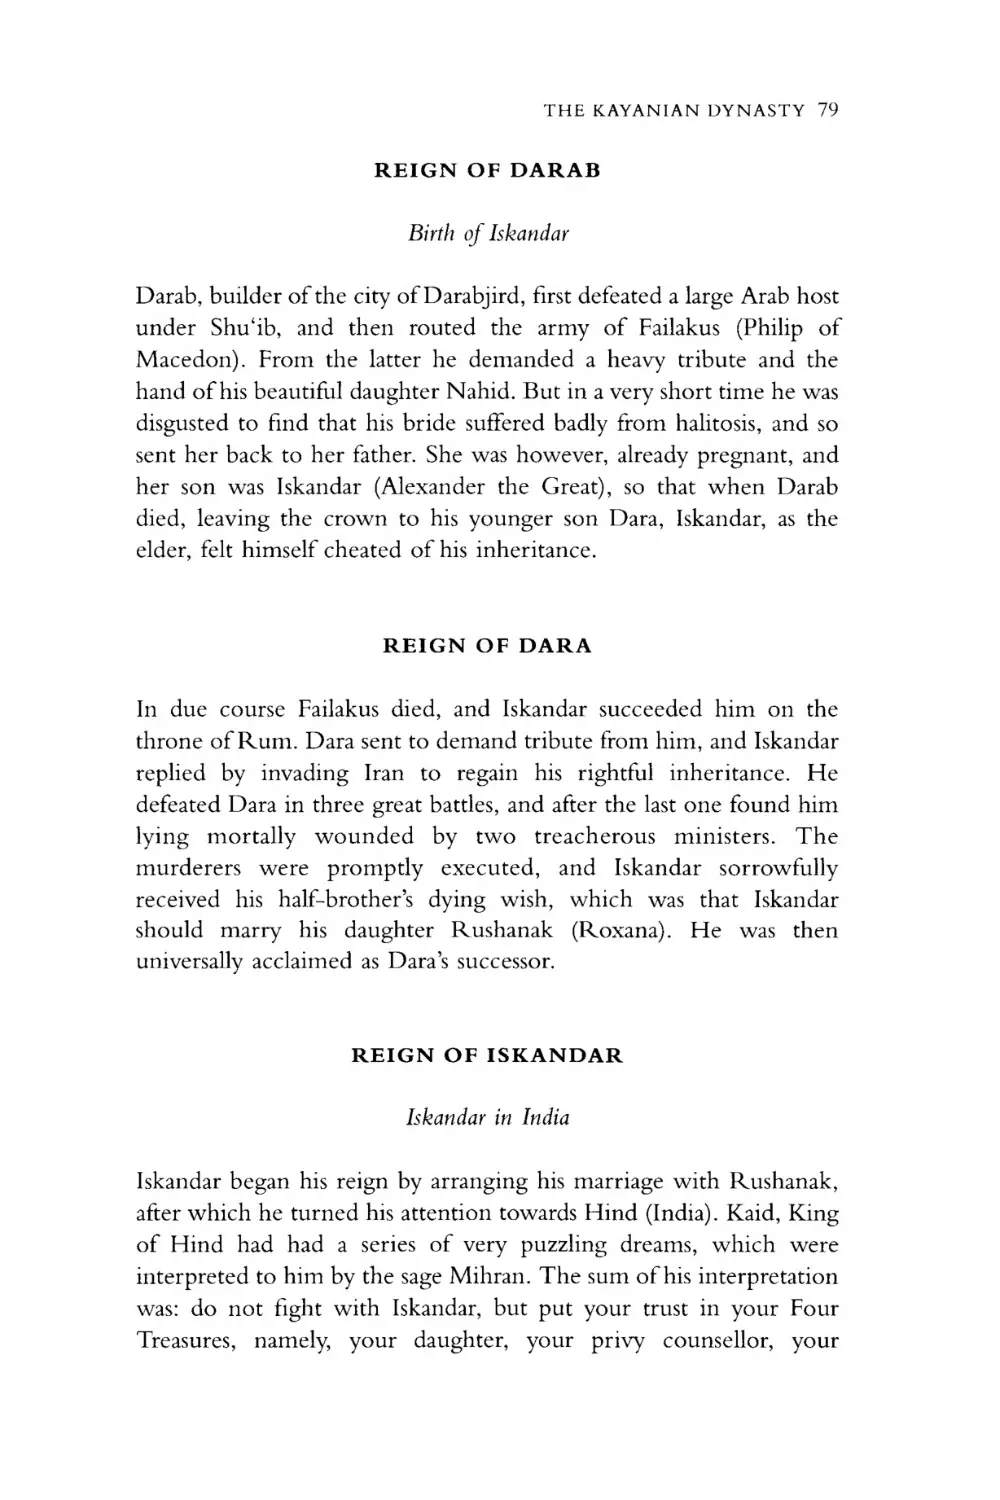 REIGN OF DARAB
Birth of Iskandar
REIGN OF DARA
REIGN OF ISKANDAR
Iskandar in India